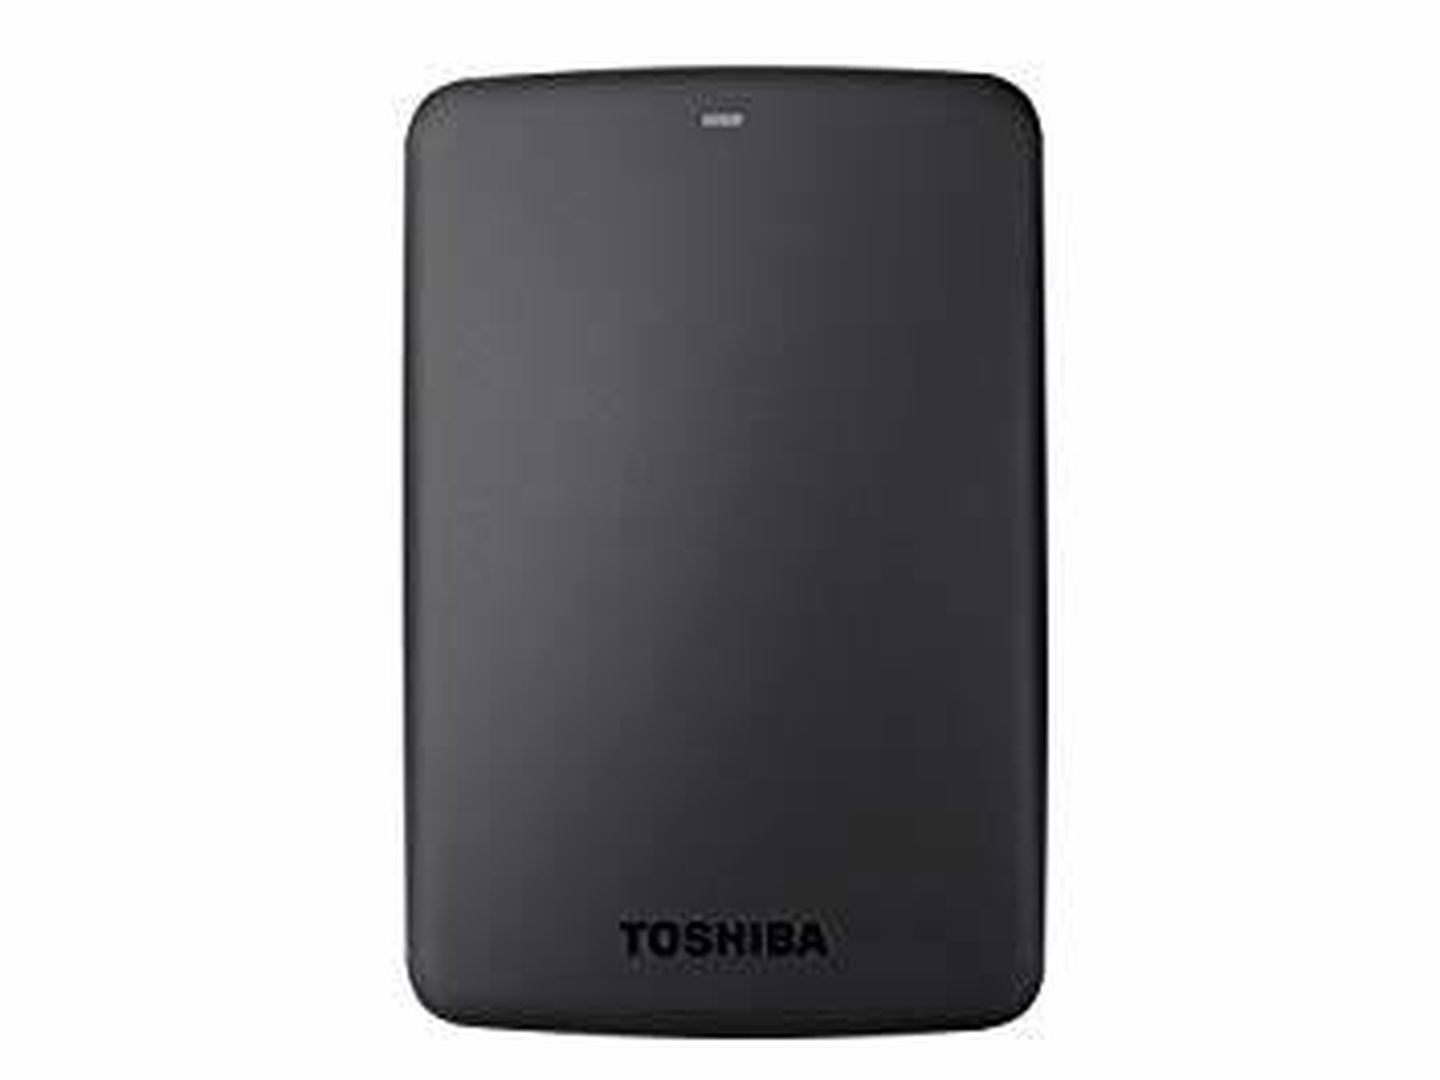 Disco duro Toshiba Canvio Basics (Imagen: Amazon)